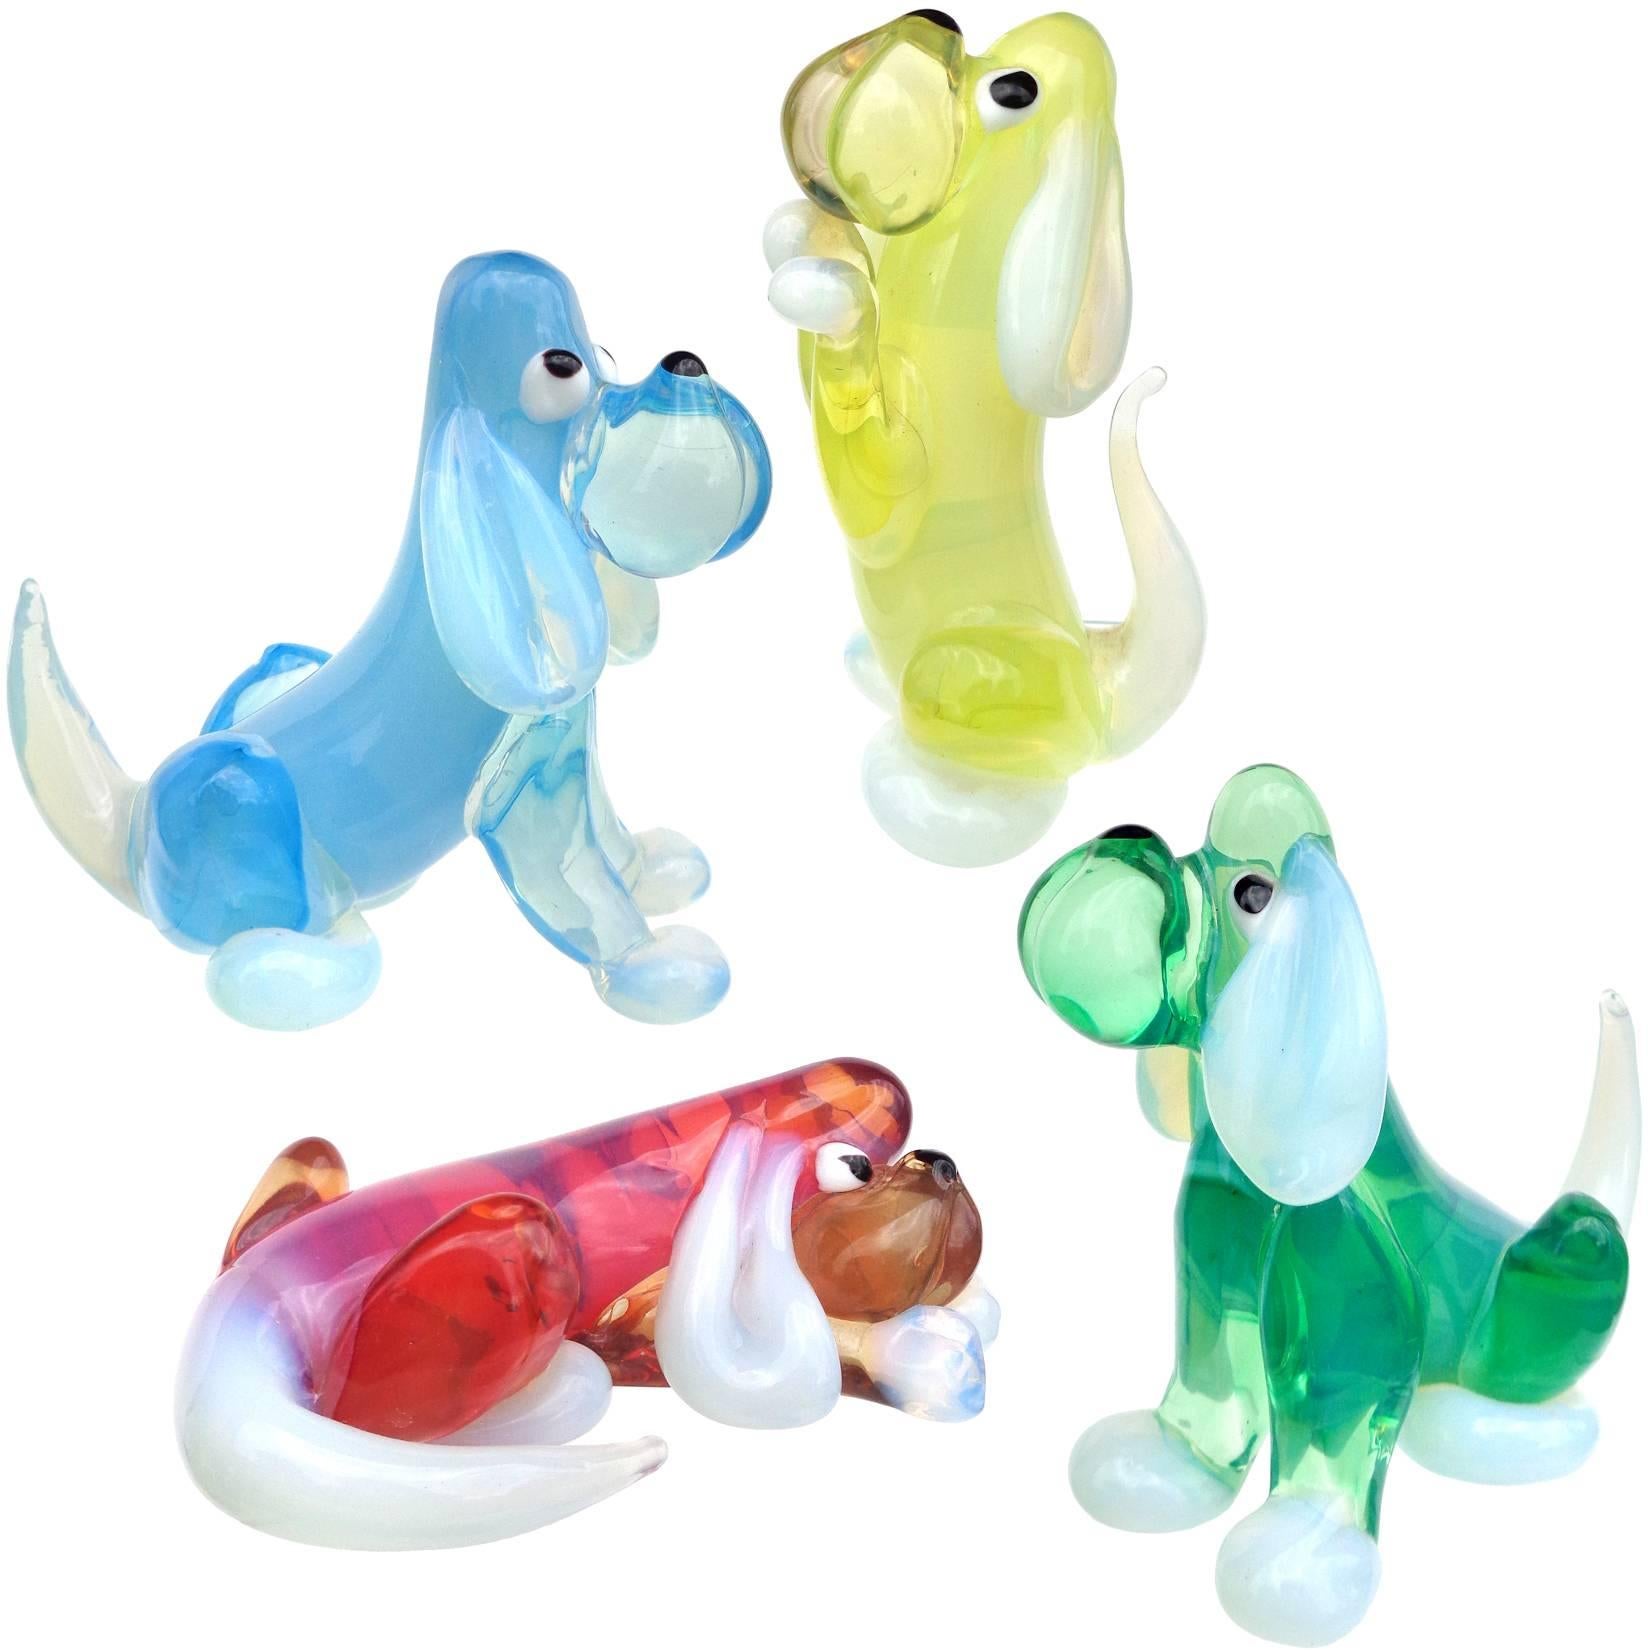 Barovier Toso Murano Opalescent Italian Art Glass Puppy Dog Figurines Sculptures